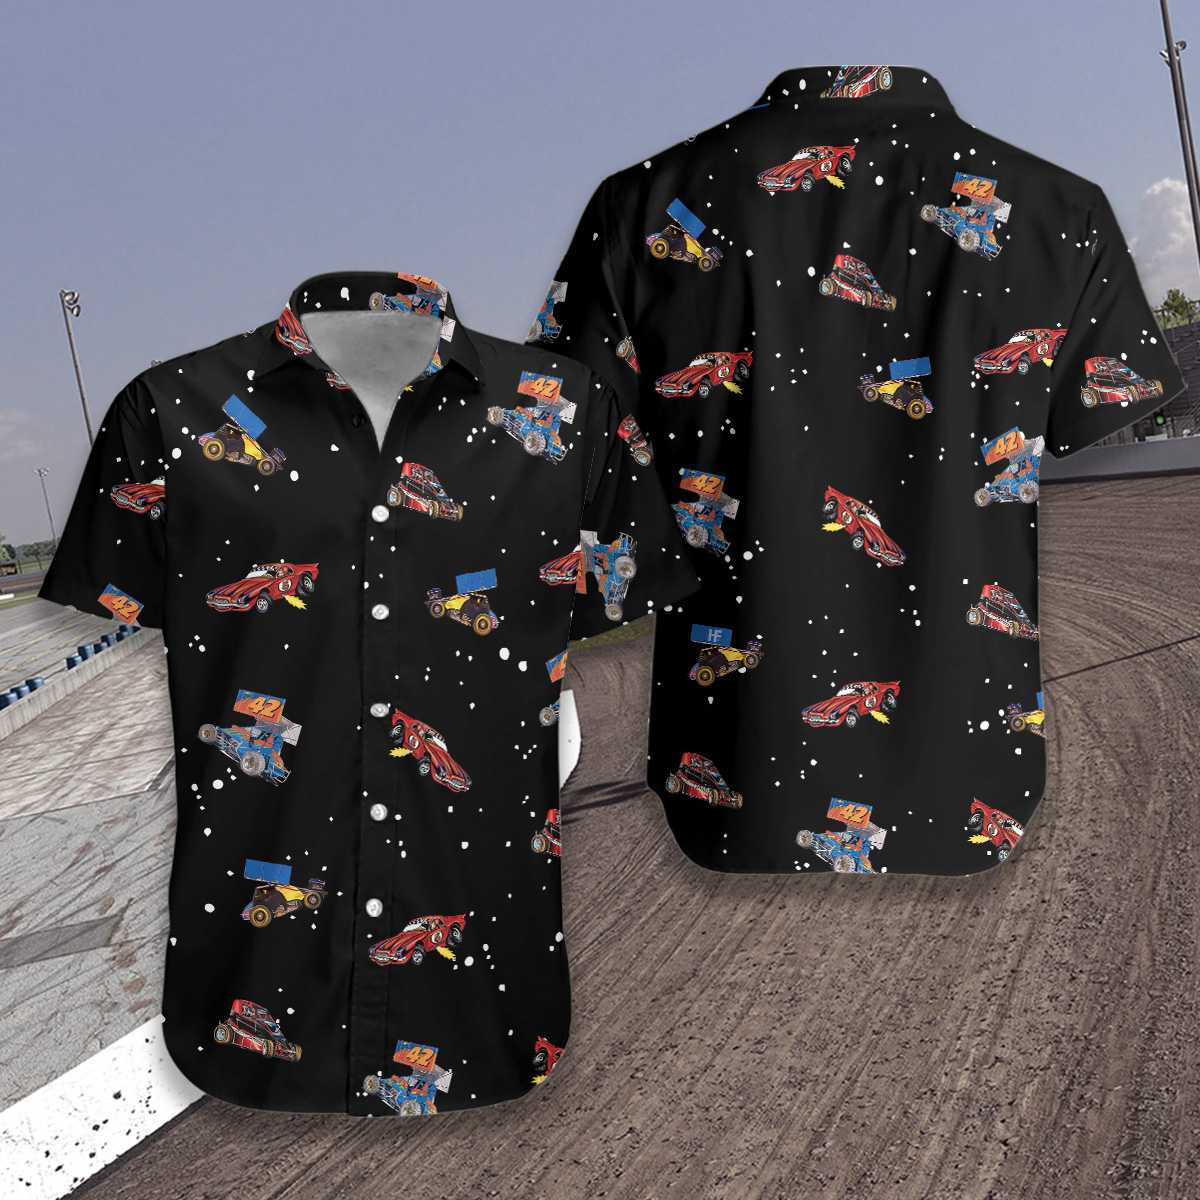 3D Dirt Track Racing Hawaiian Shirt, Cool Printed Car Racing Aloha Shirt For Men And Women - Perfect Gift For Racing Lovers, Friends, Husband, Boyfriend, Family